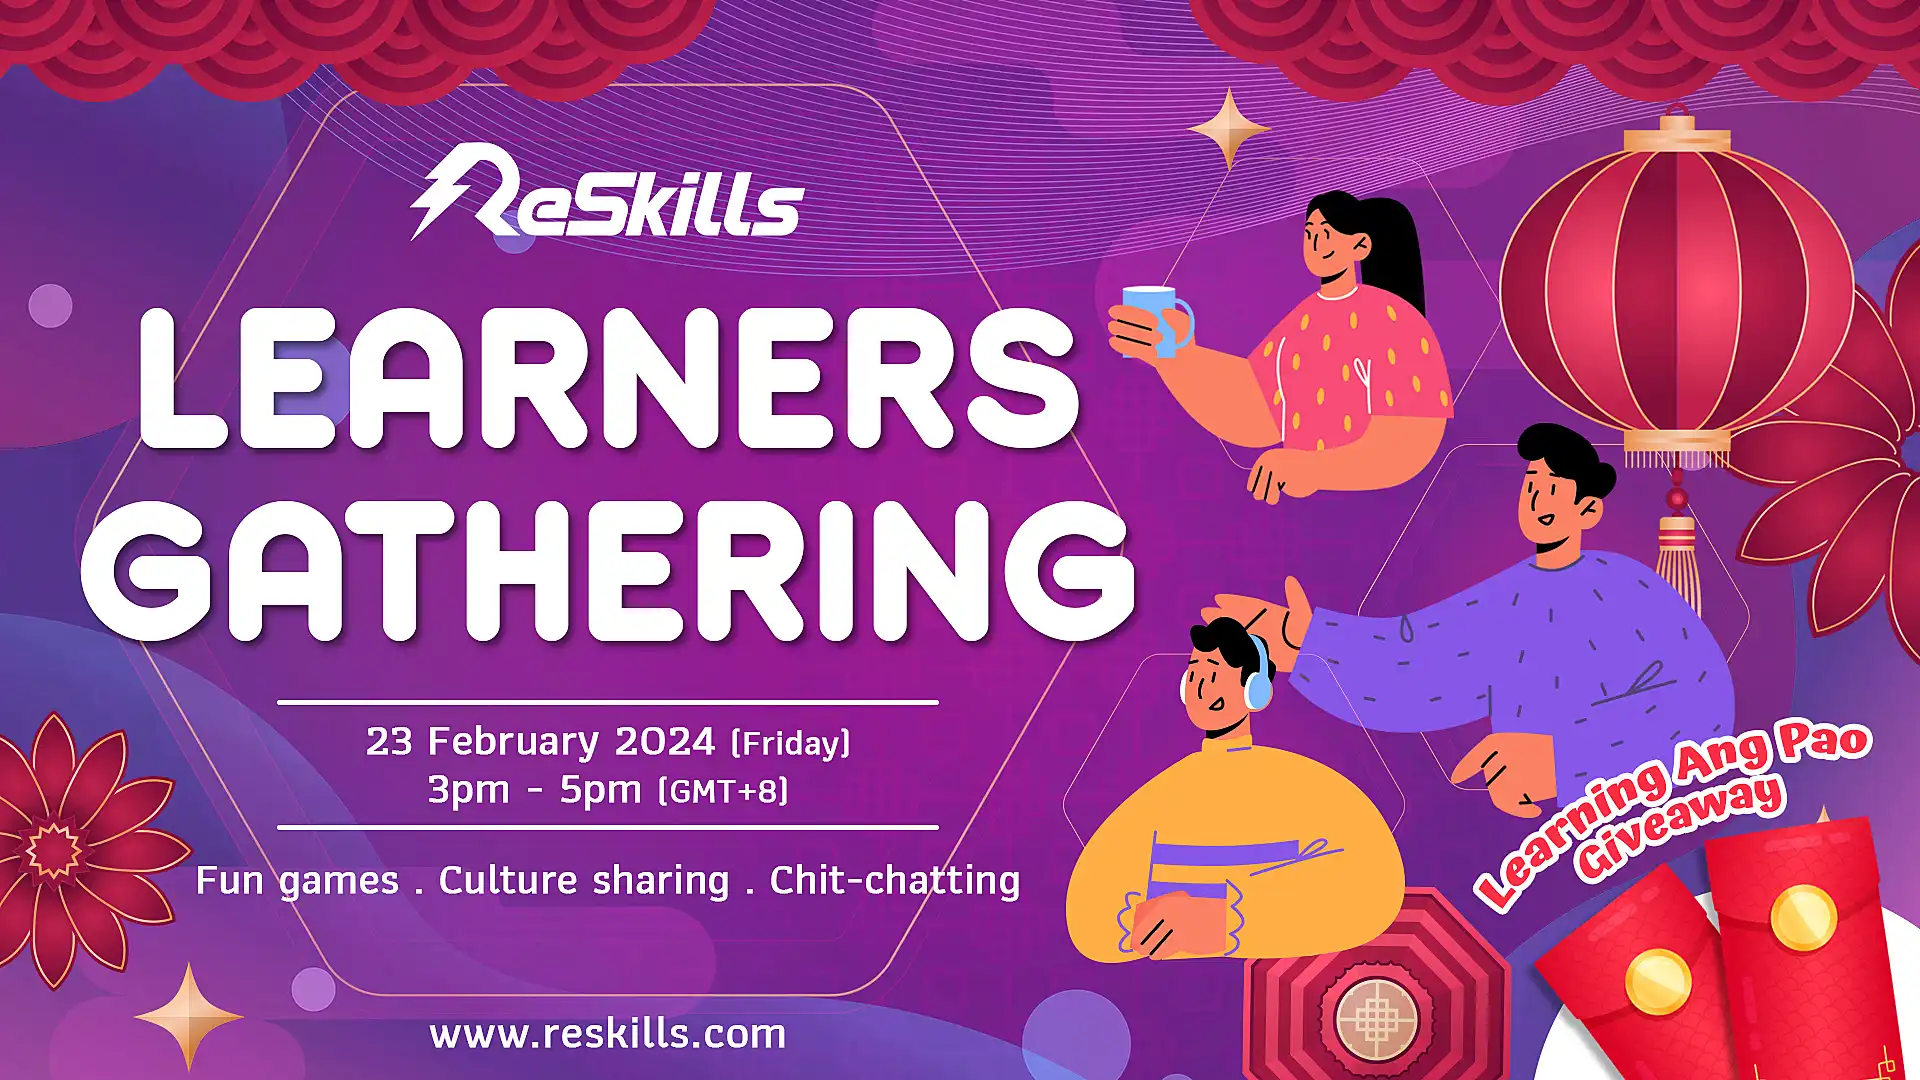 ReSkills Learners Gathering Fun Games & Culture Sharing